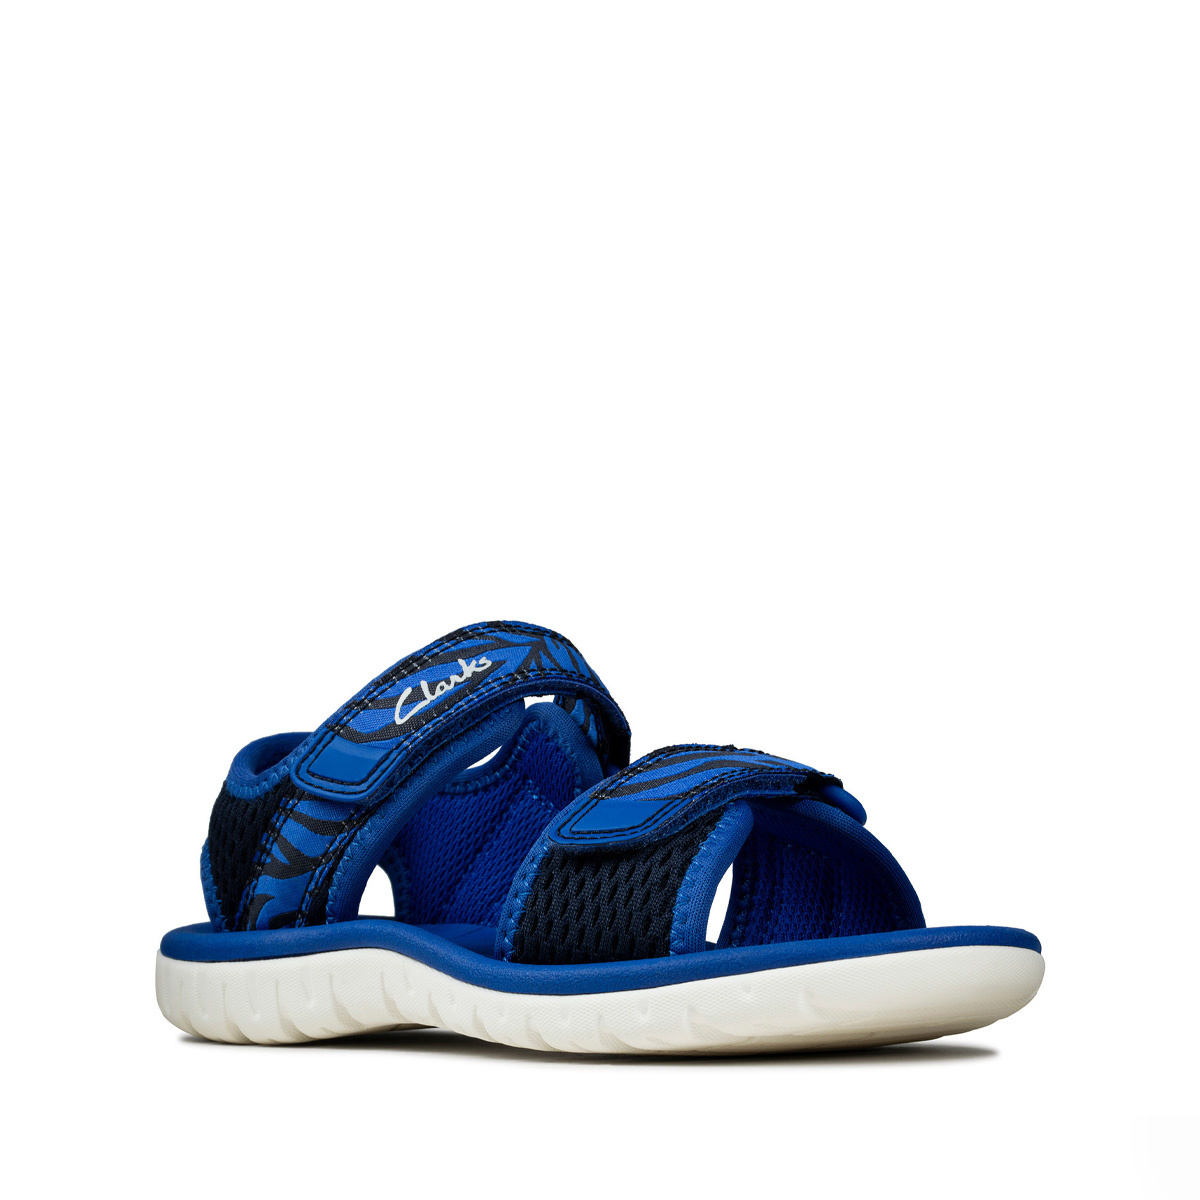 clarks navy blue sandals